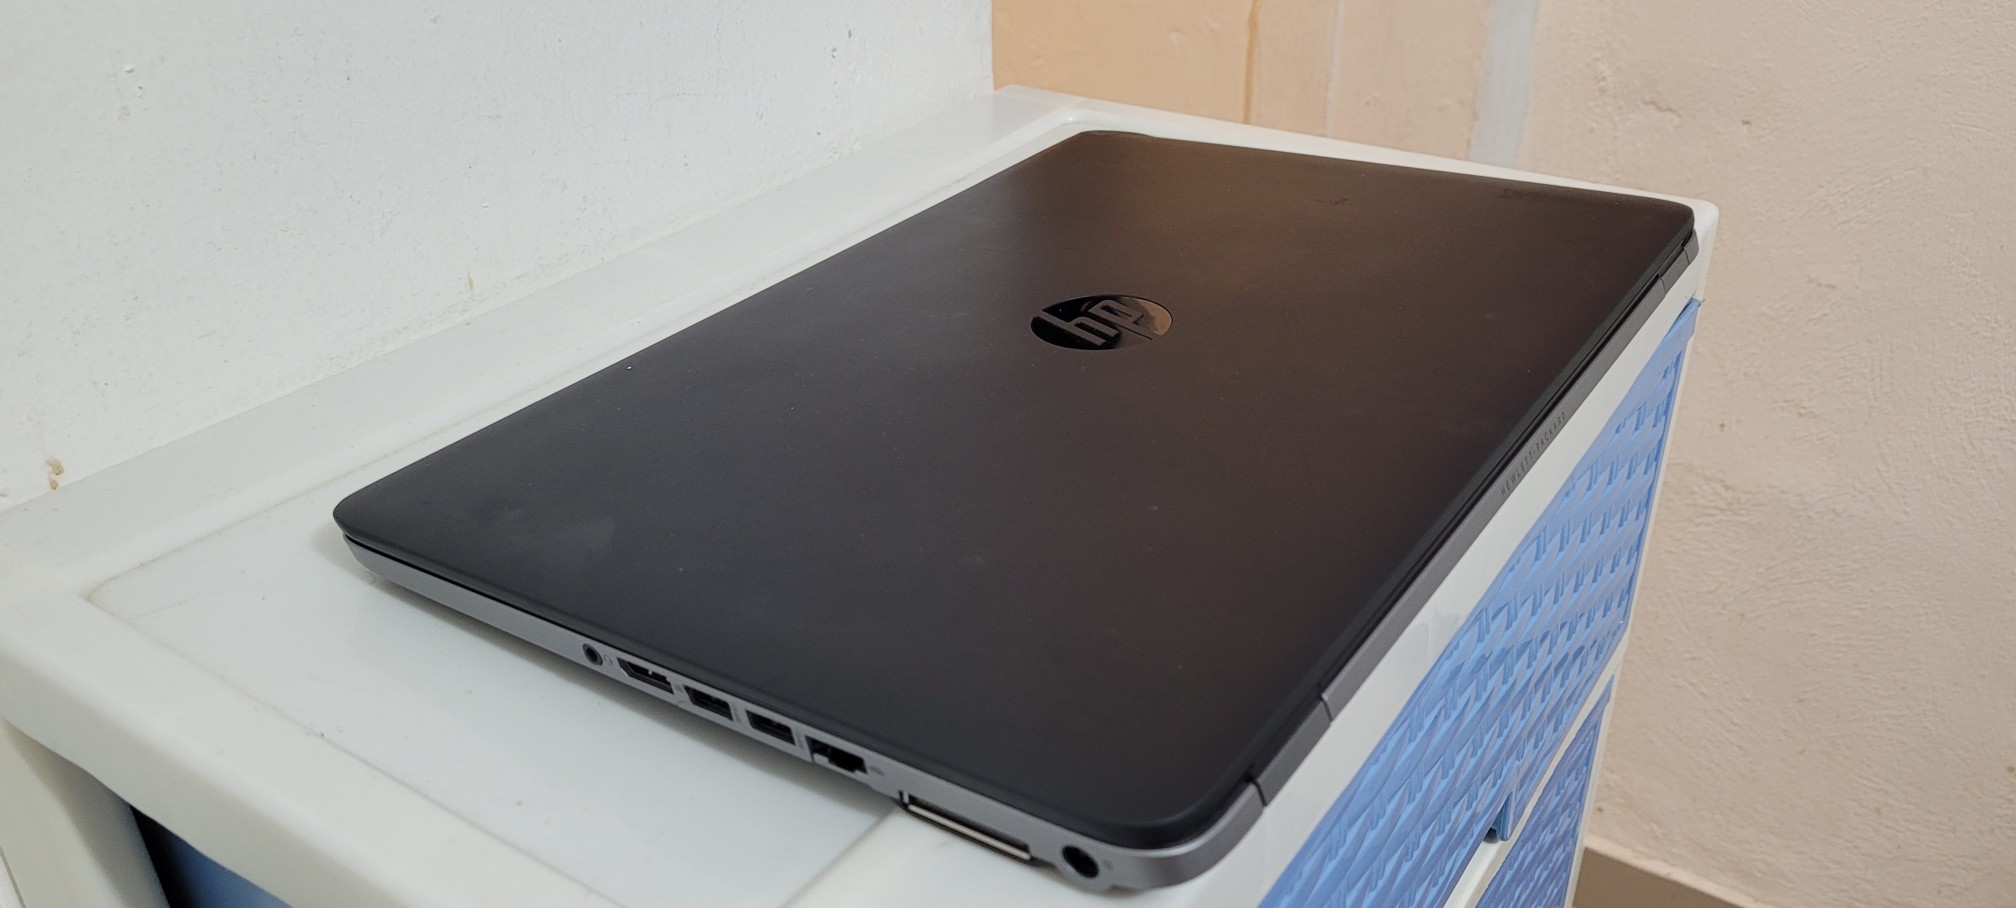 computadoras y laptops - laptop hp Slim 850 17 Pulg Core i7 Ram 16gb Disco 500gb vIdeo 8gb 2